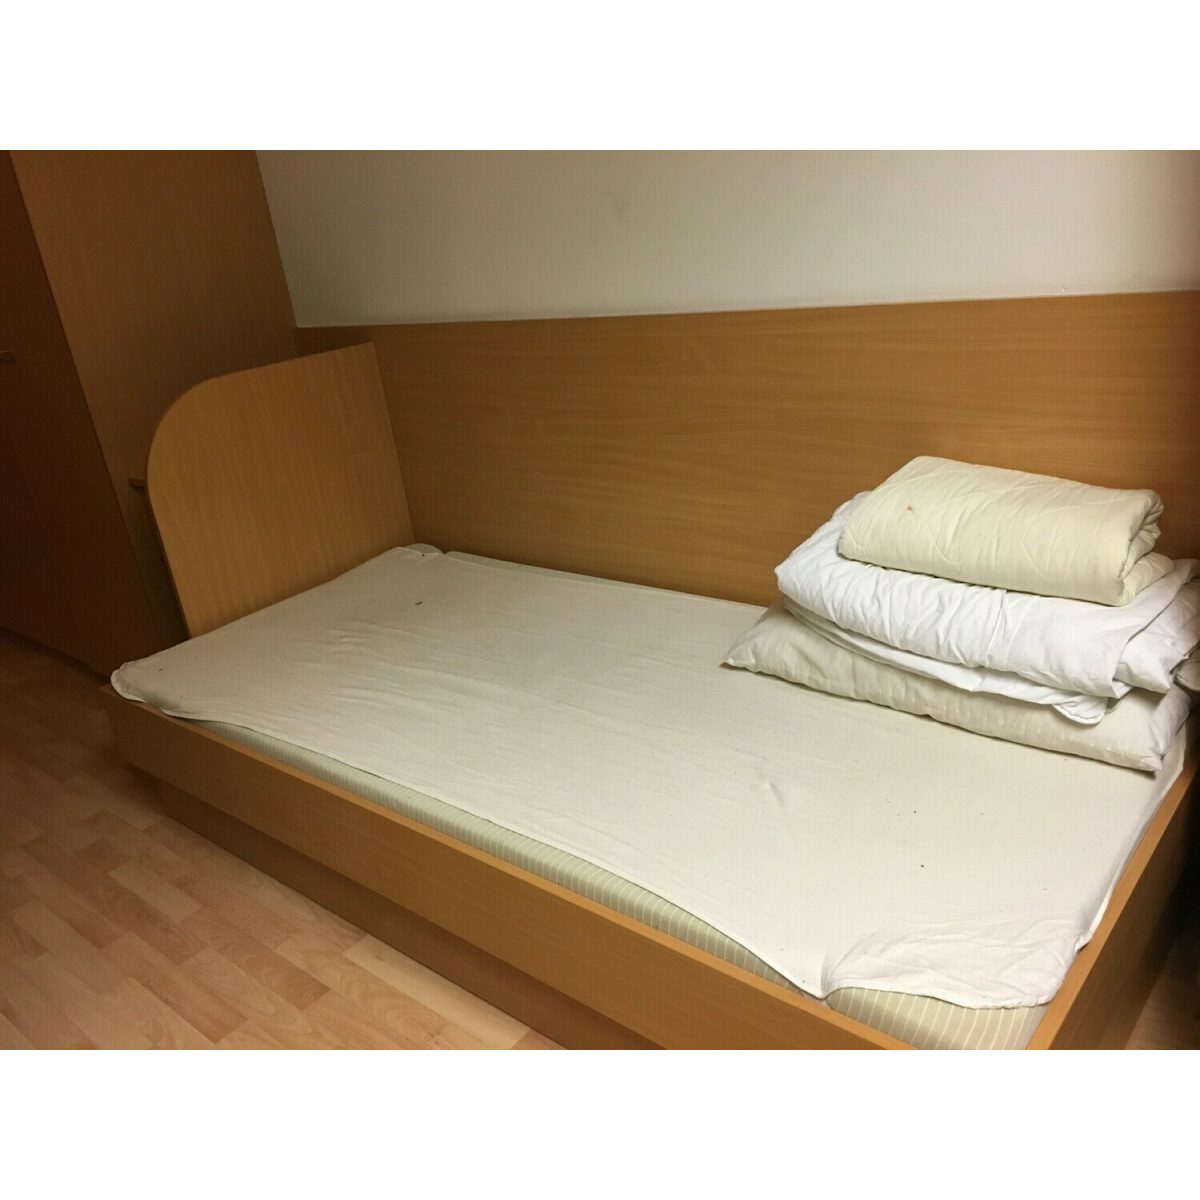 Single room student apartment close to Klagenfurt university 3